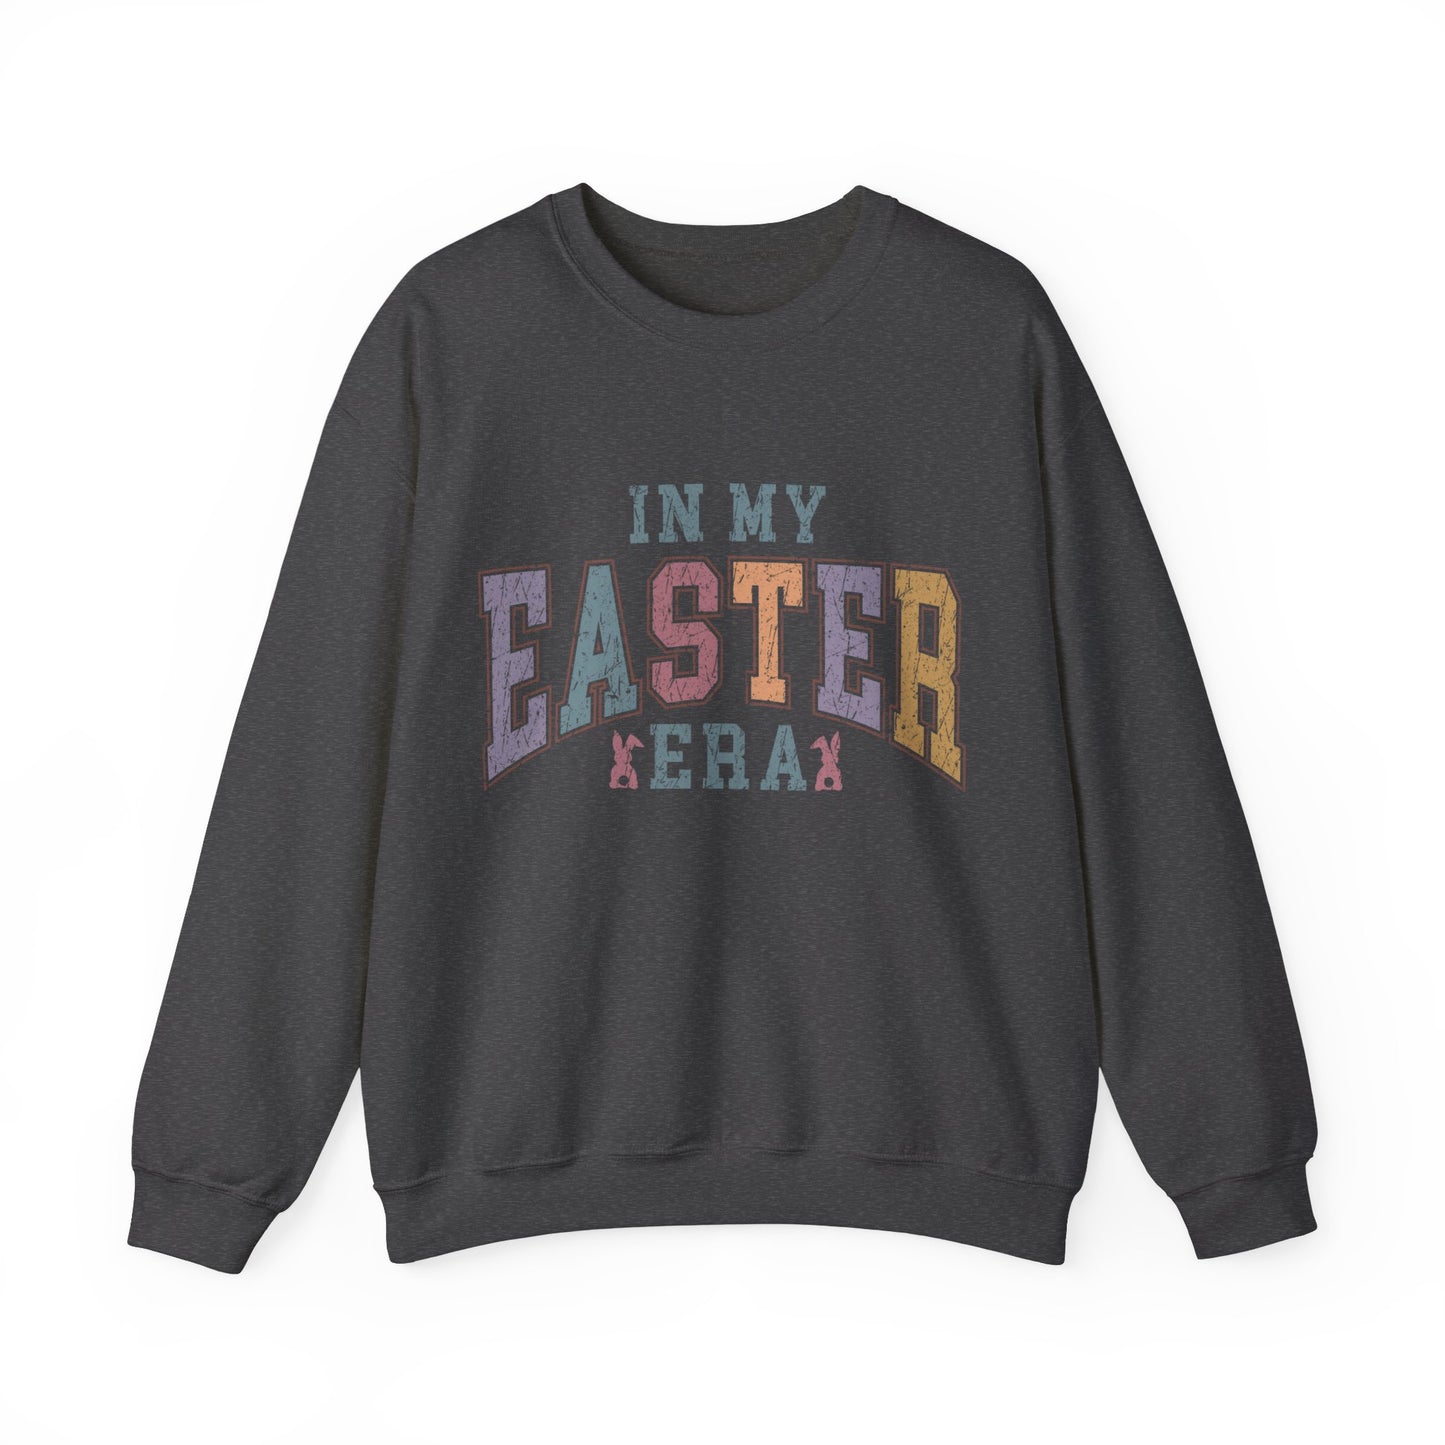 In my Easter Era Women's Easter Sweatshirt